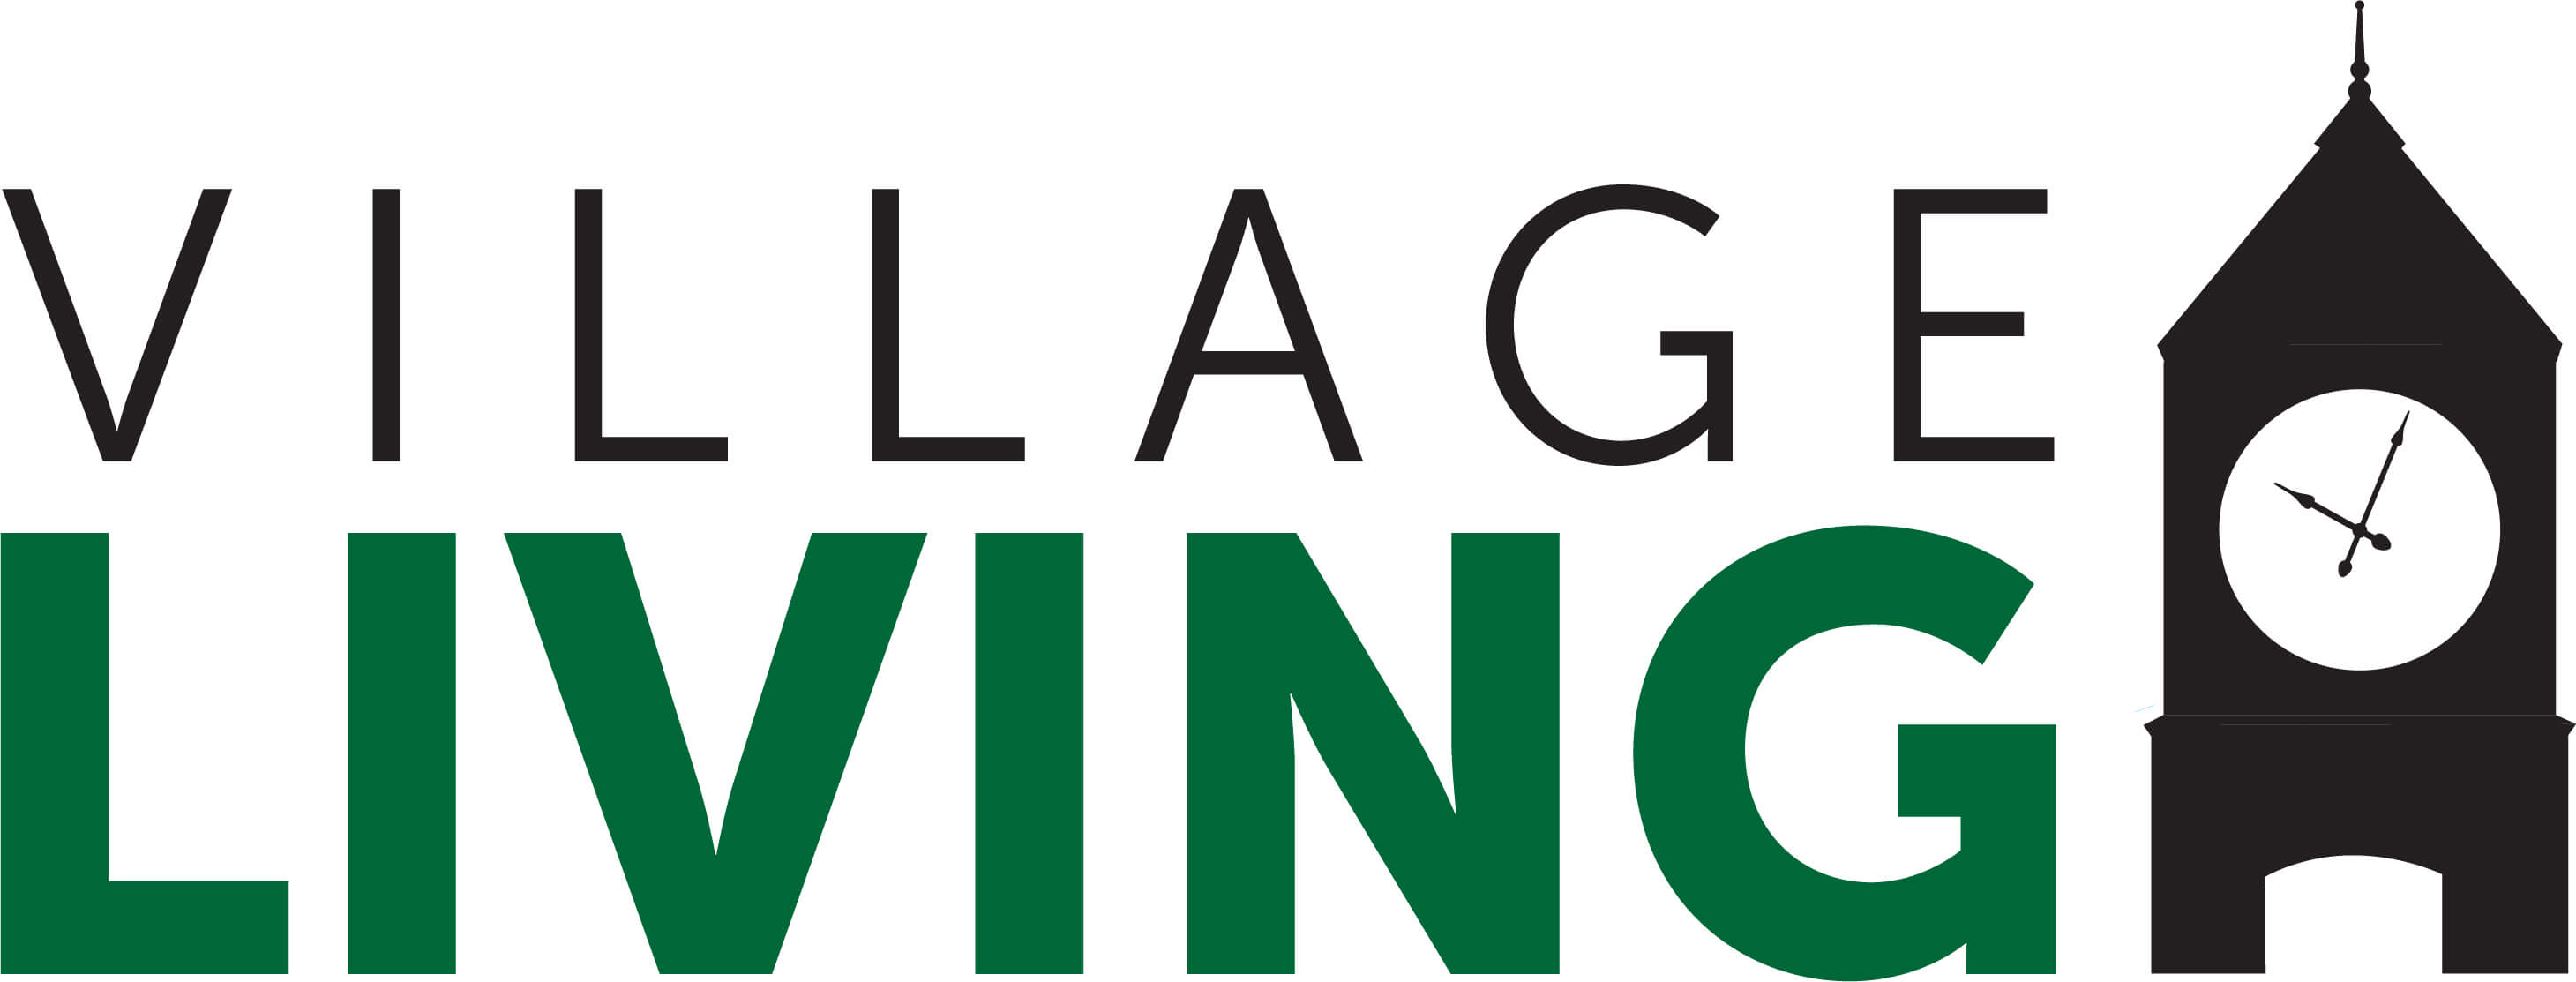 Village Living Logo - FINAL